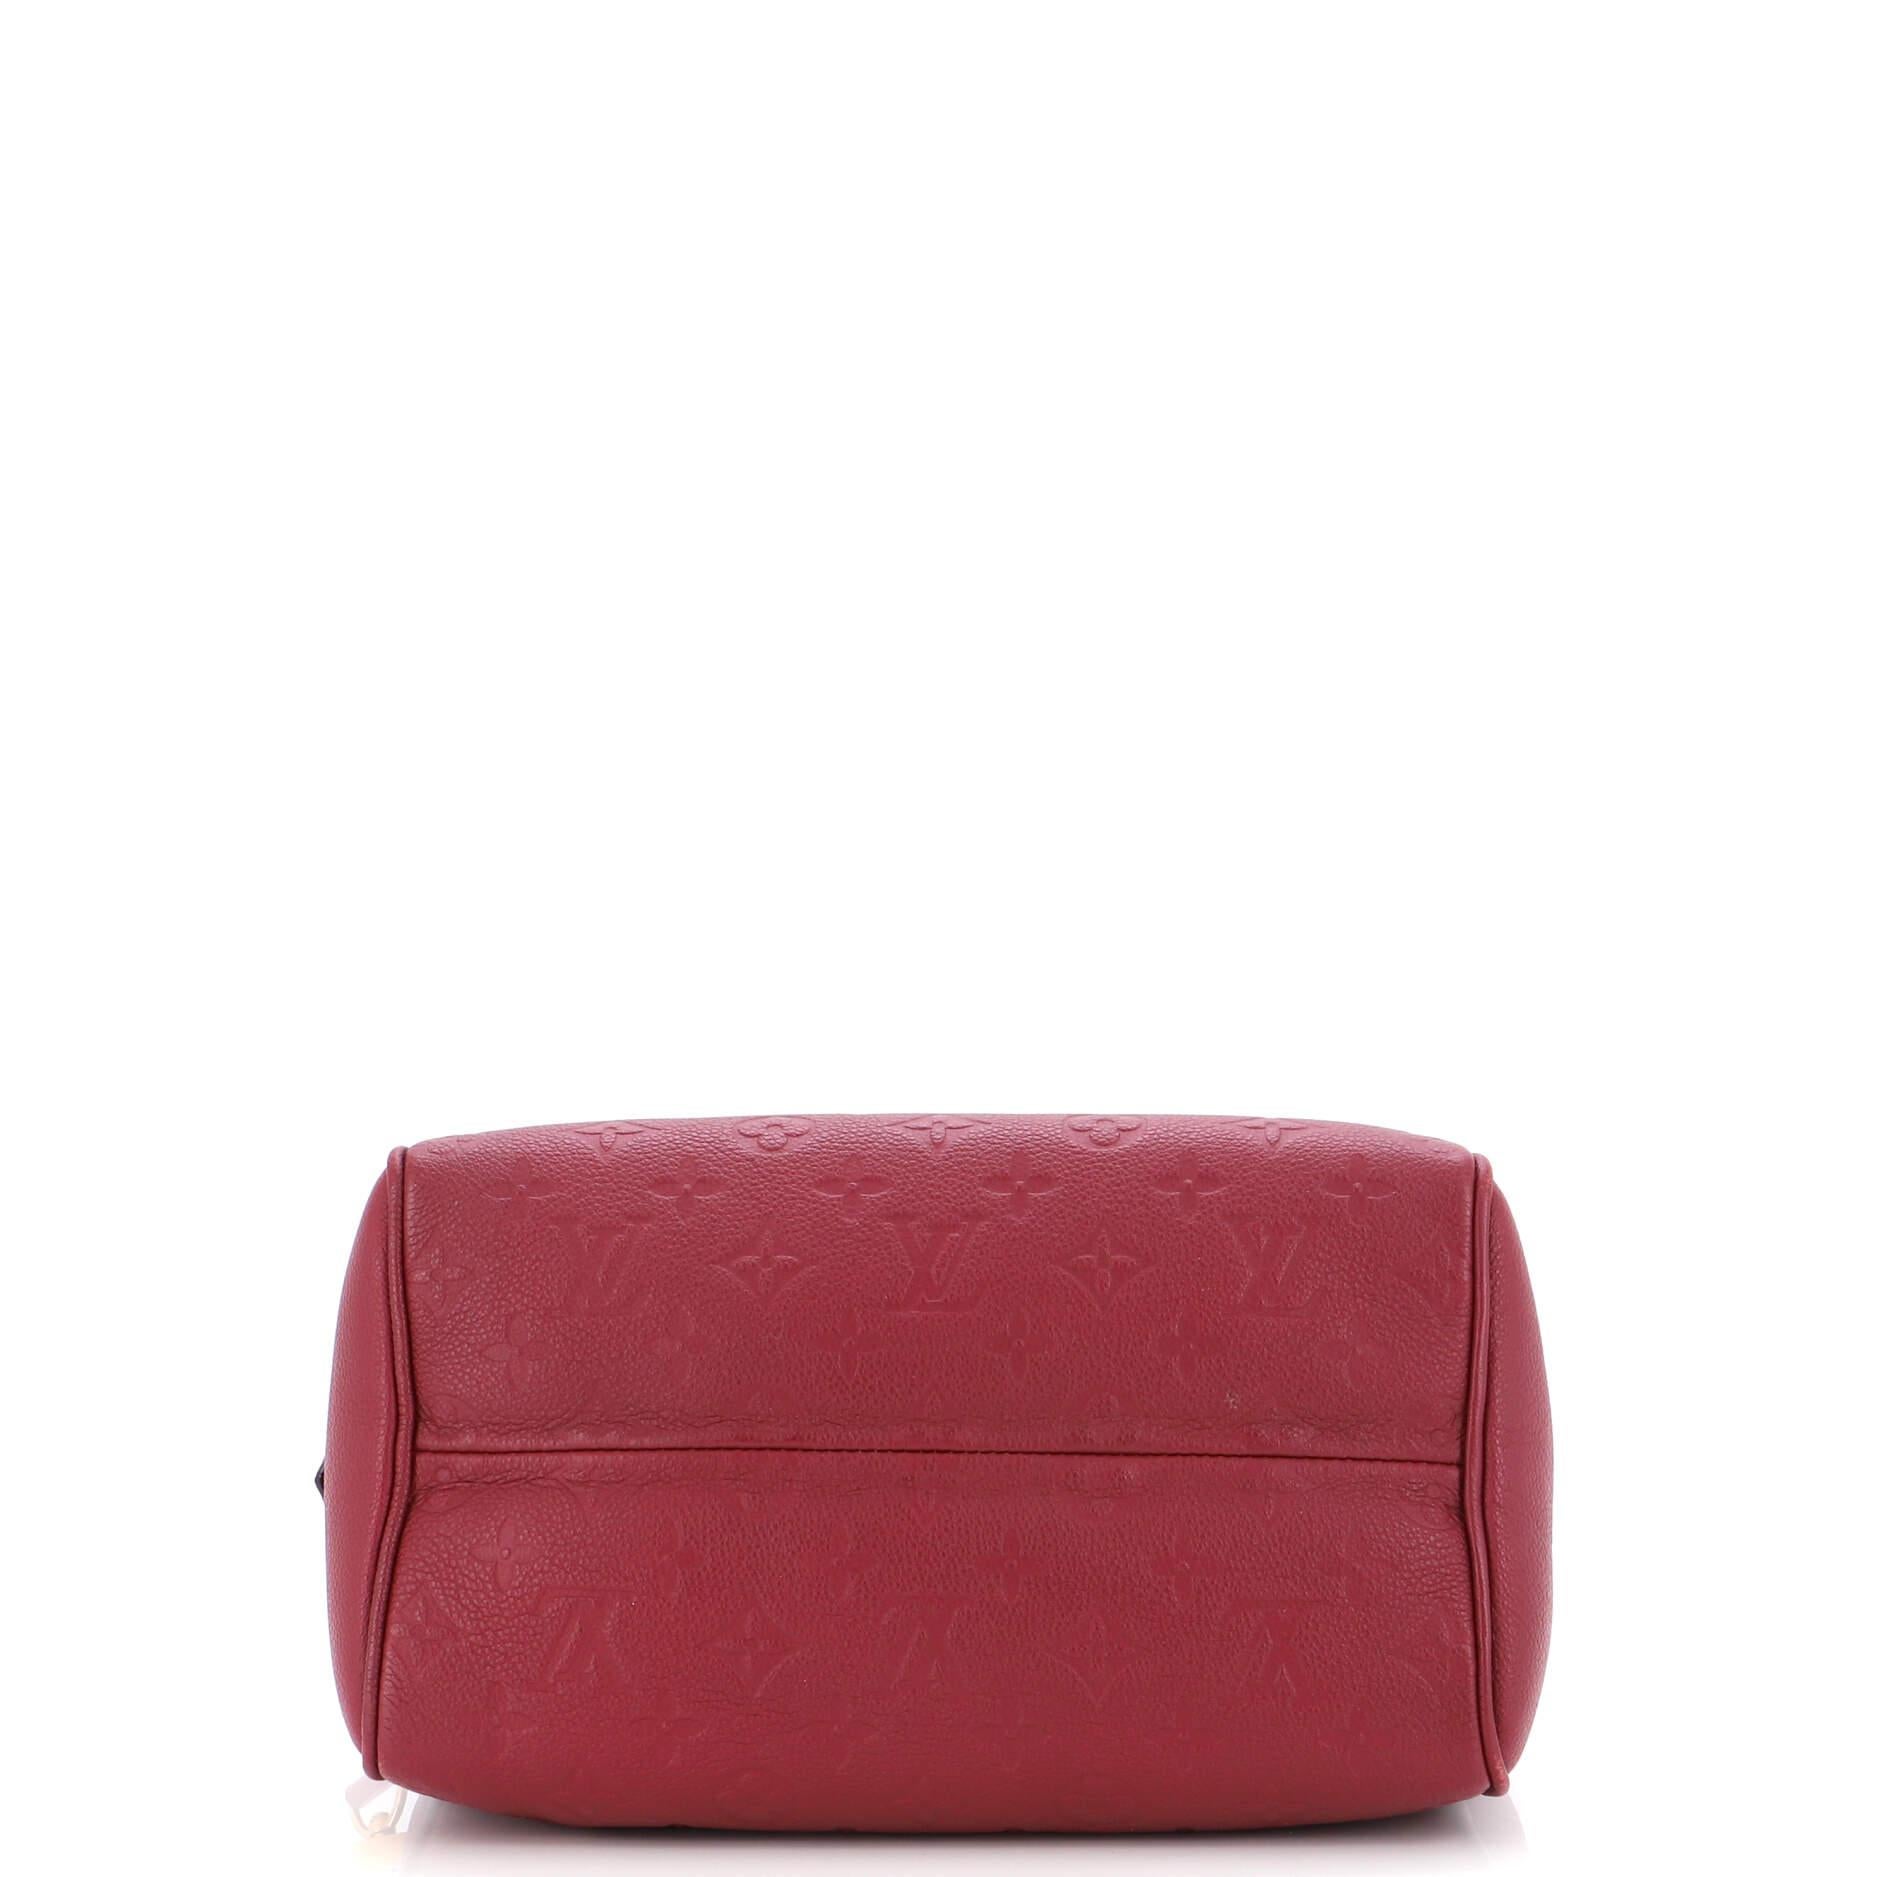 Women's or Men's Louis Vuitton Speedy Bandouliere NM Bag Monogram Empreinte Leather 25